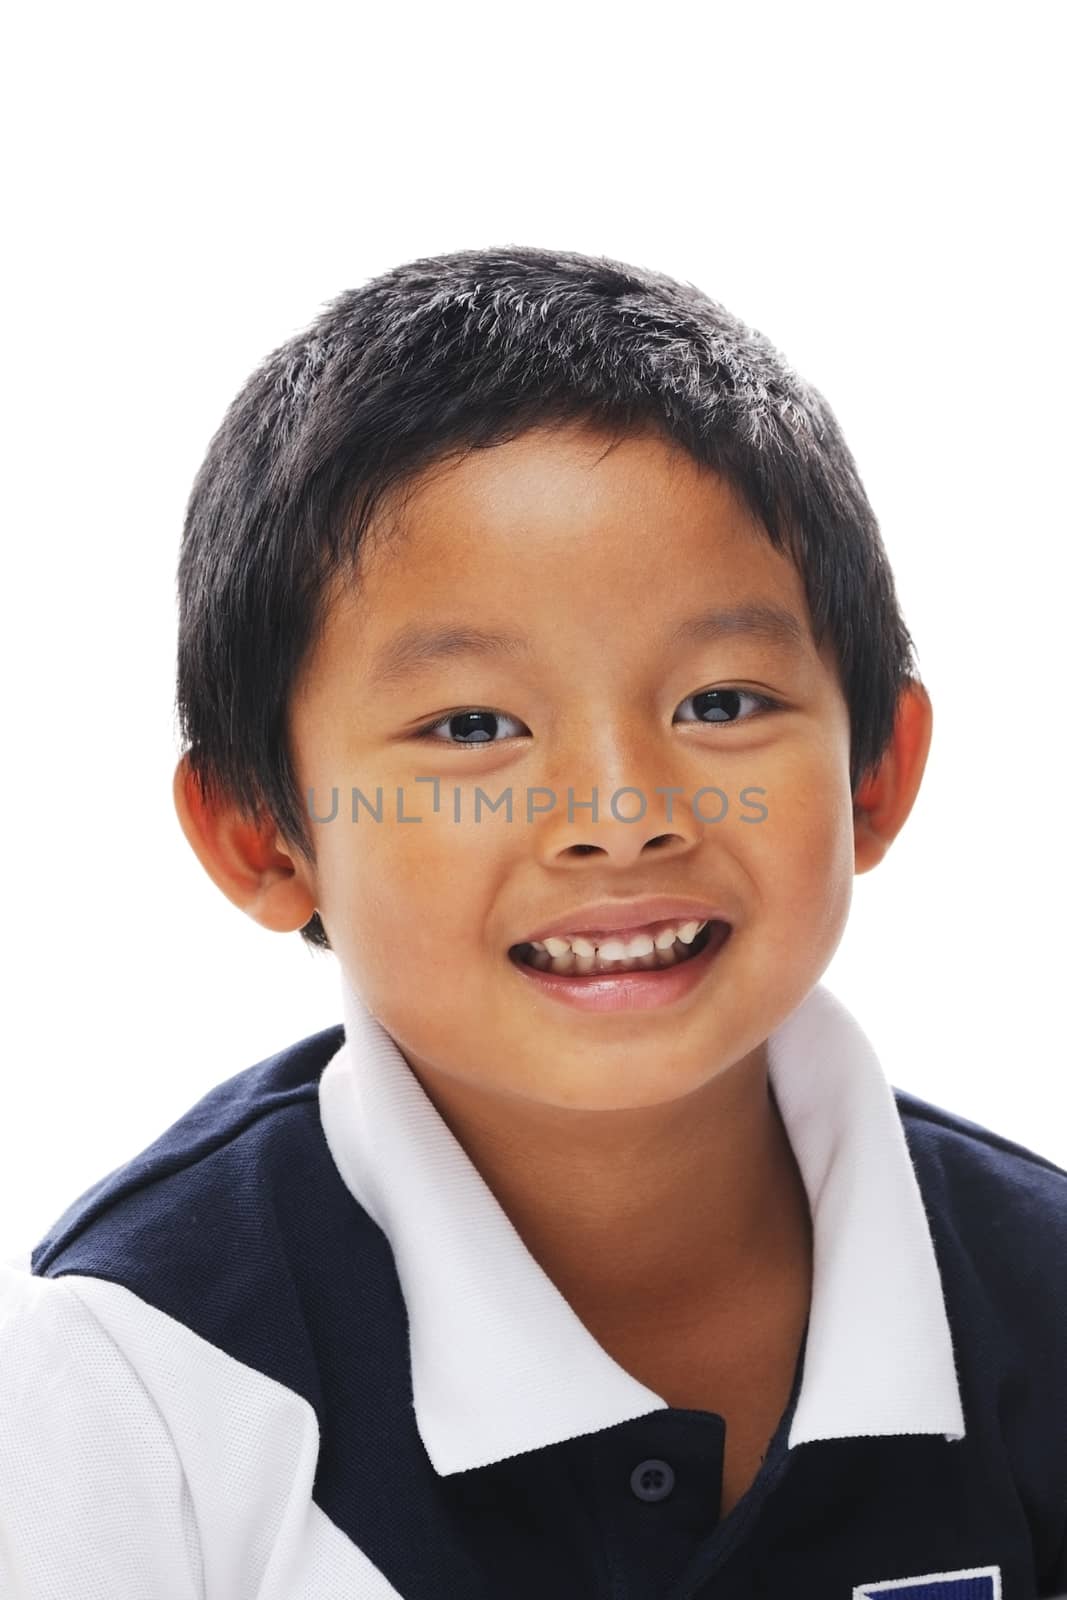 Filipino Boy Smiling by kmwphotography